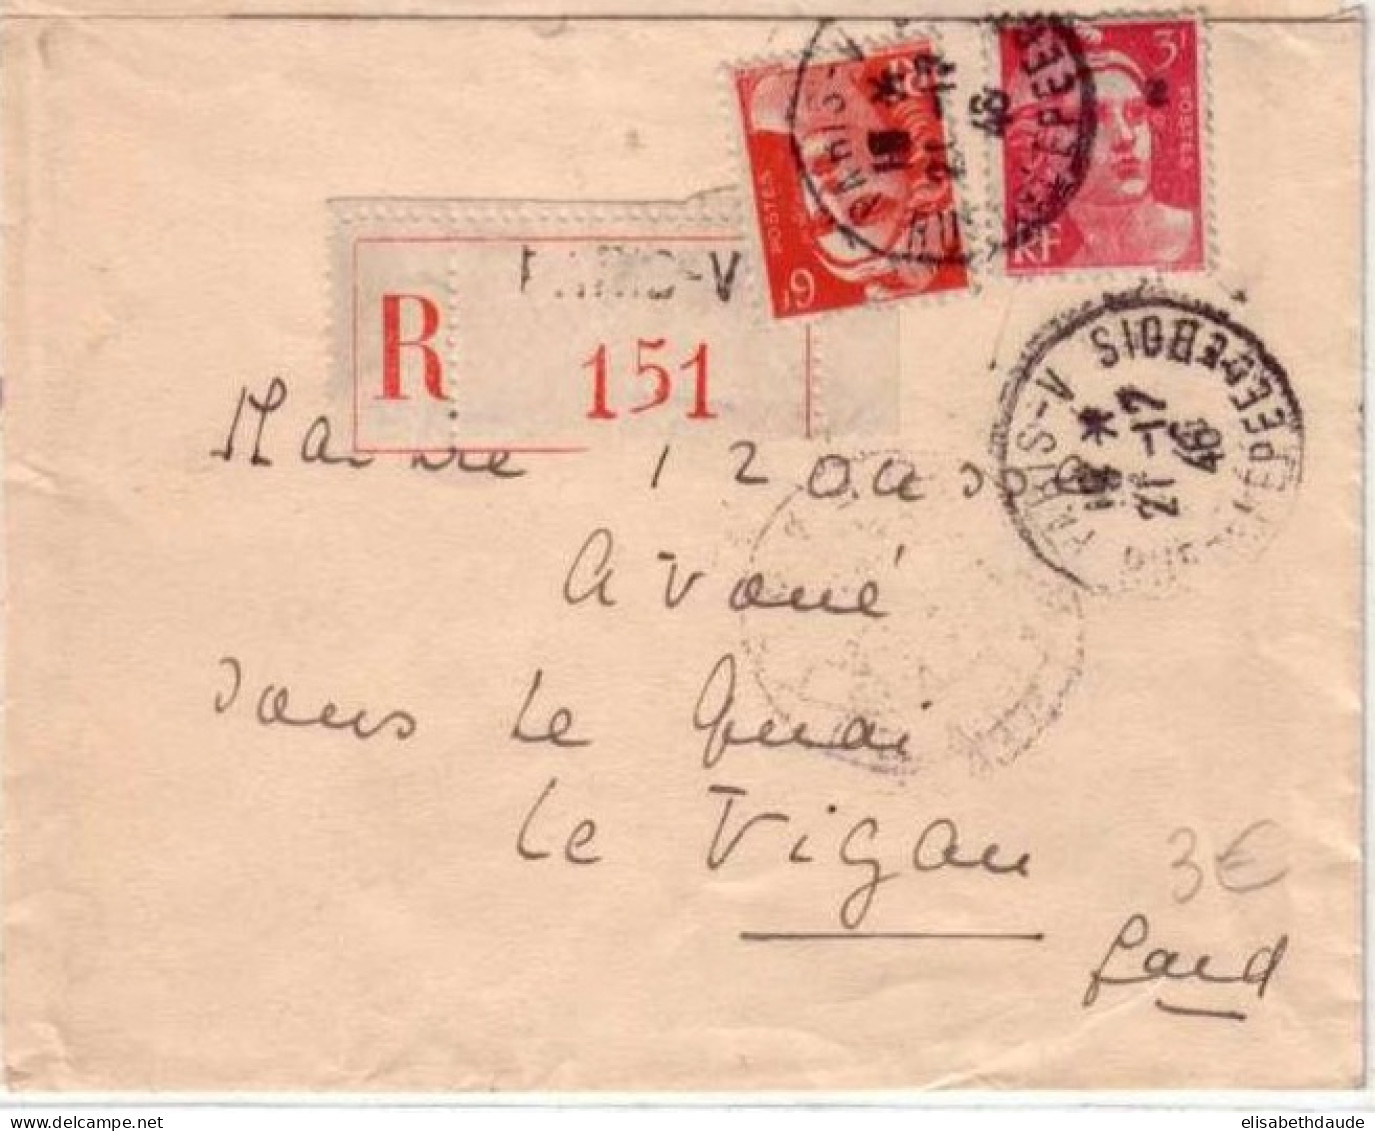 GANDON -Yvert N° 721+716 Sur LETTRE RECOMMANDEE De PARIS (V) Pour LE VIGAN (GARD) -1946 - 1945-54 Marianna Di Gandon